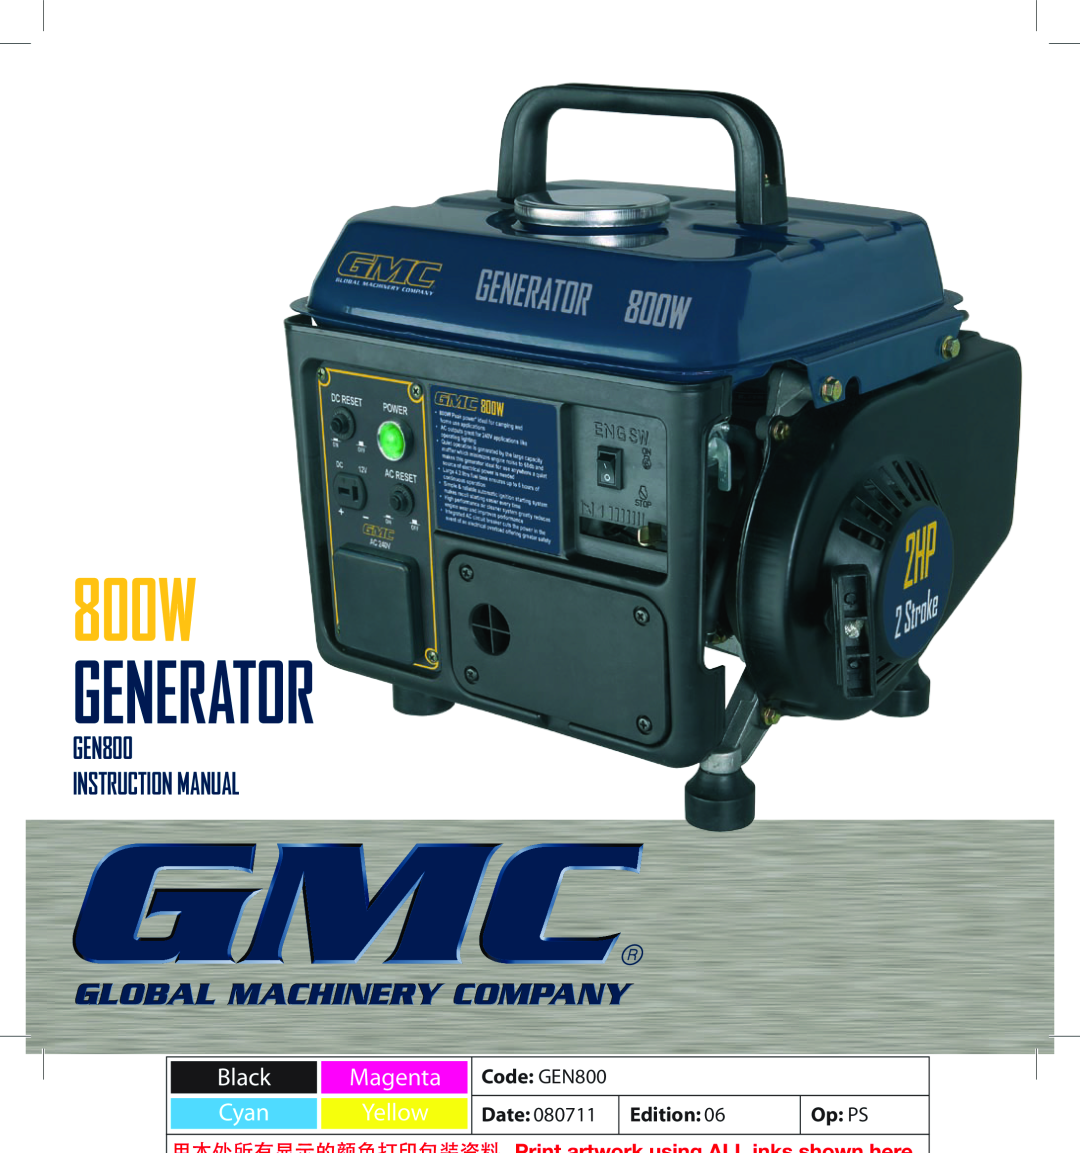 Global Machinery Company instruction manual Code GEN800, Date, Edition, Op PS, 800W GENERATOR 